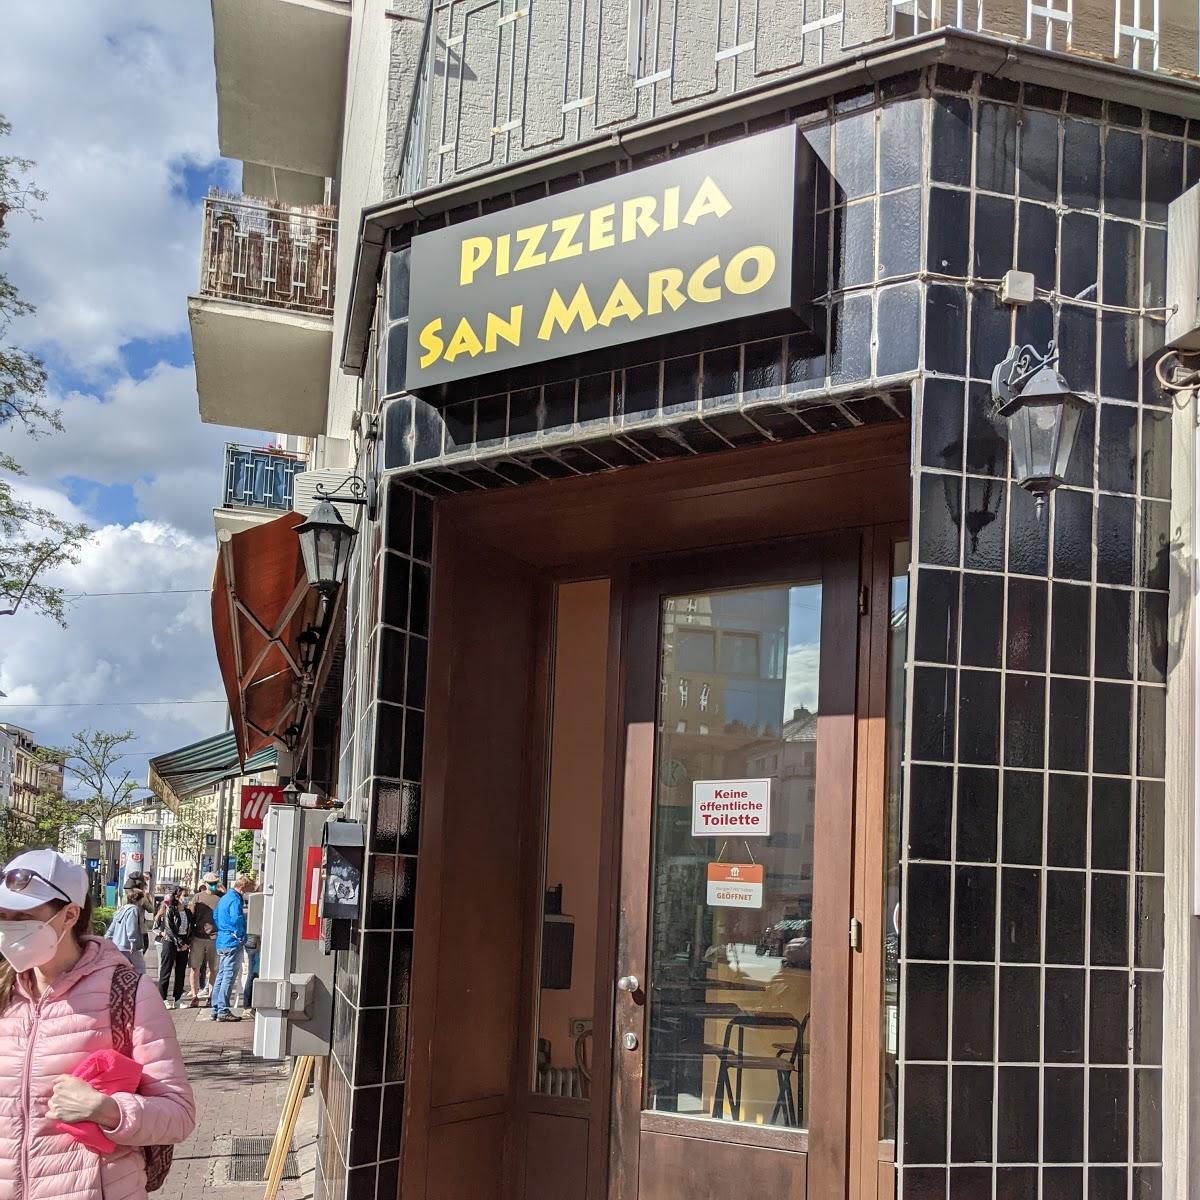 Restaurant "Pizzeria San Marco" in Frankfurt am Main